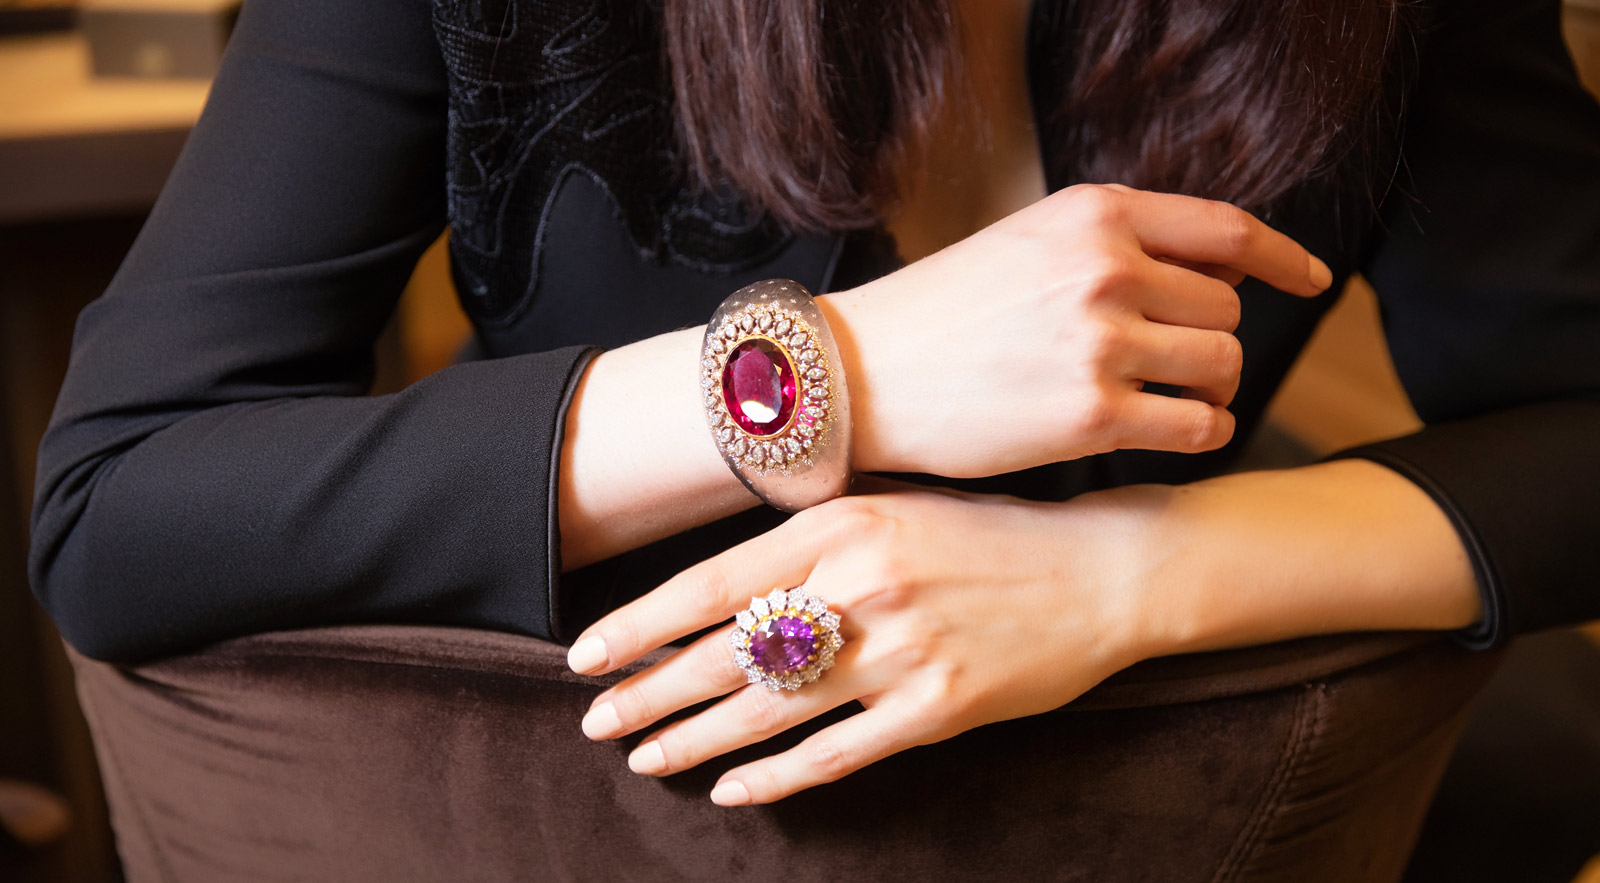 Buccellati rubellite cuff bracelet and kunzite ring. Photographer: Simon Martner